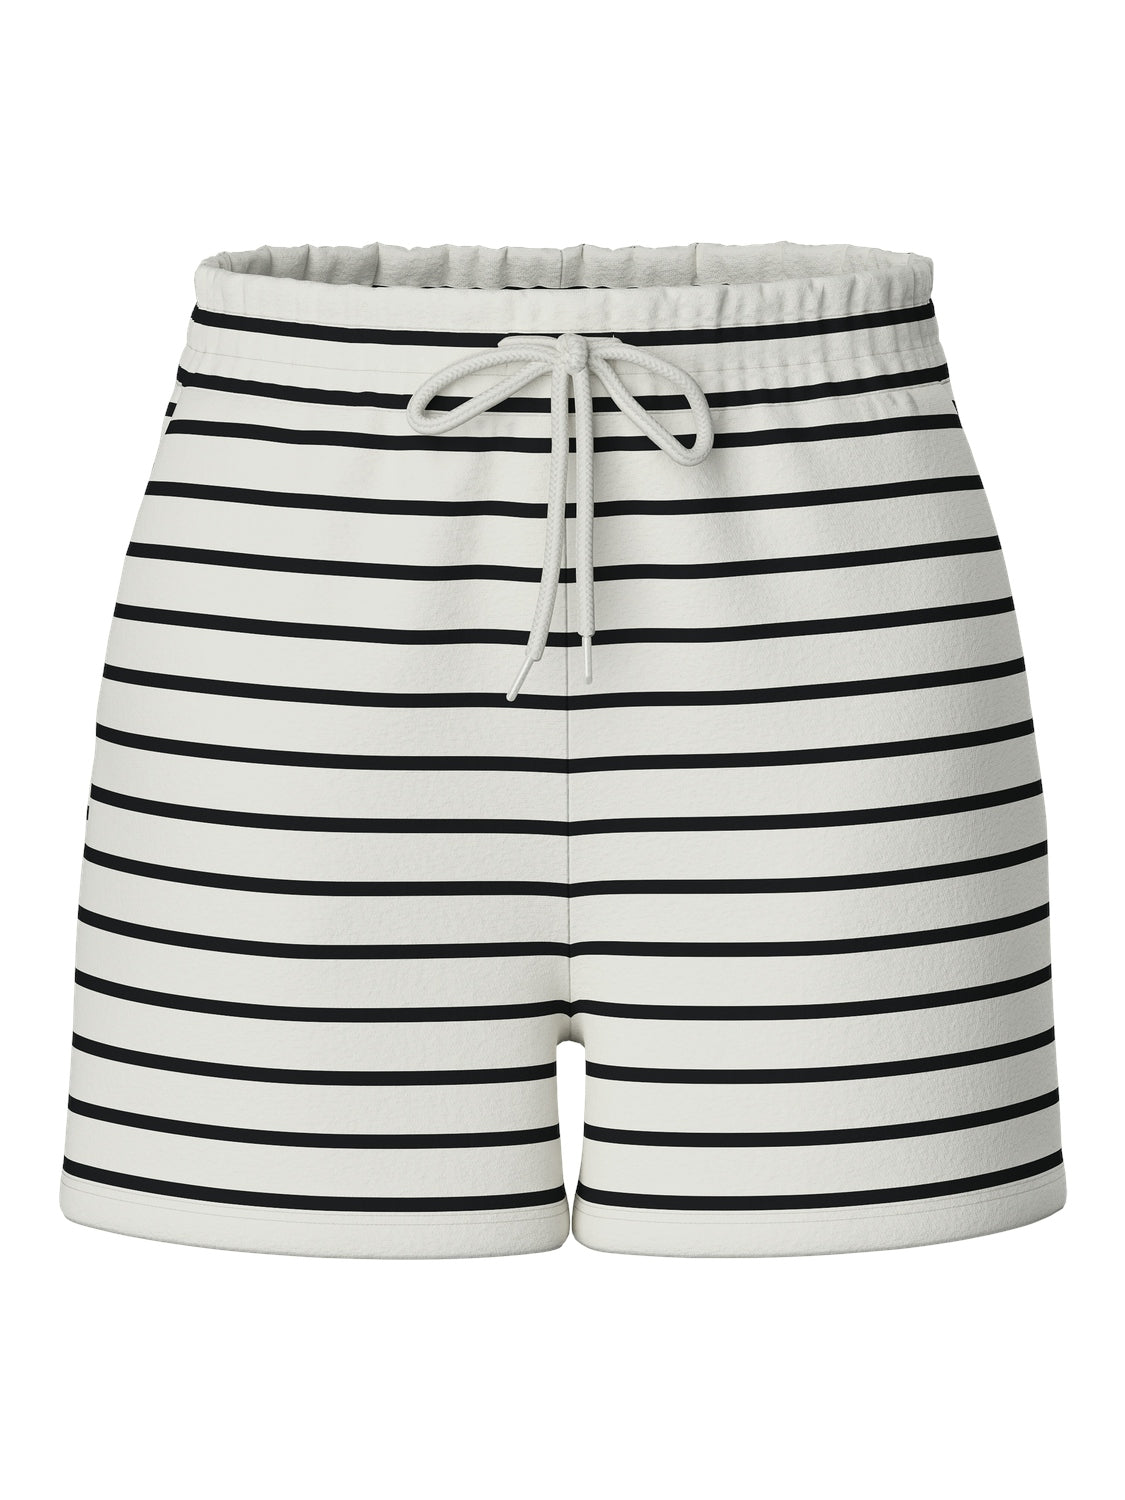 Pieces Chilli Summer shorts - Stripe